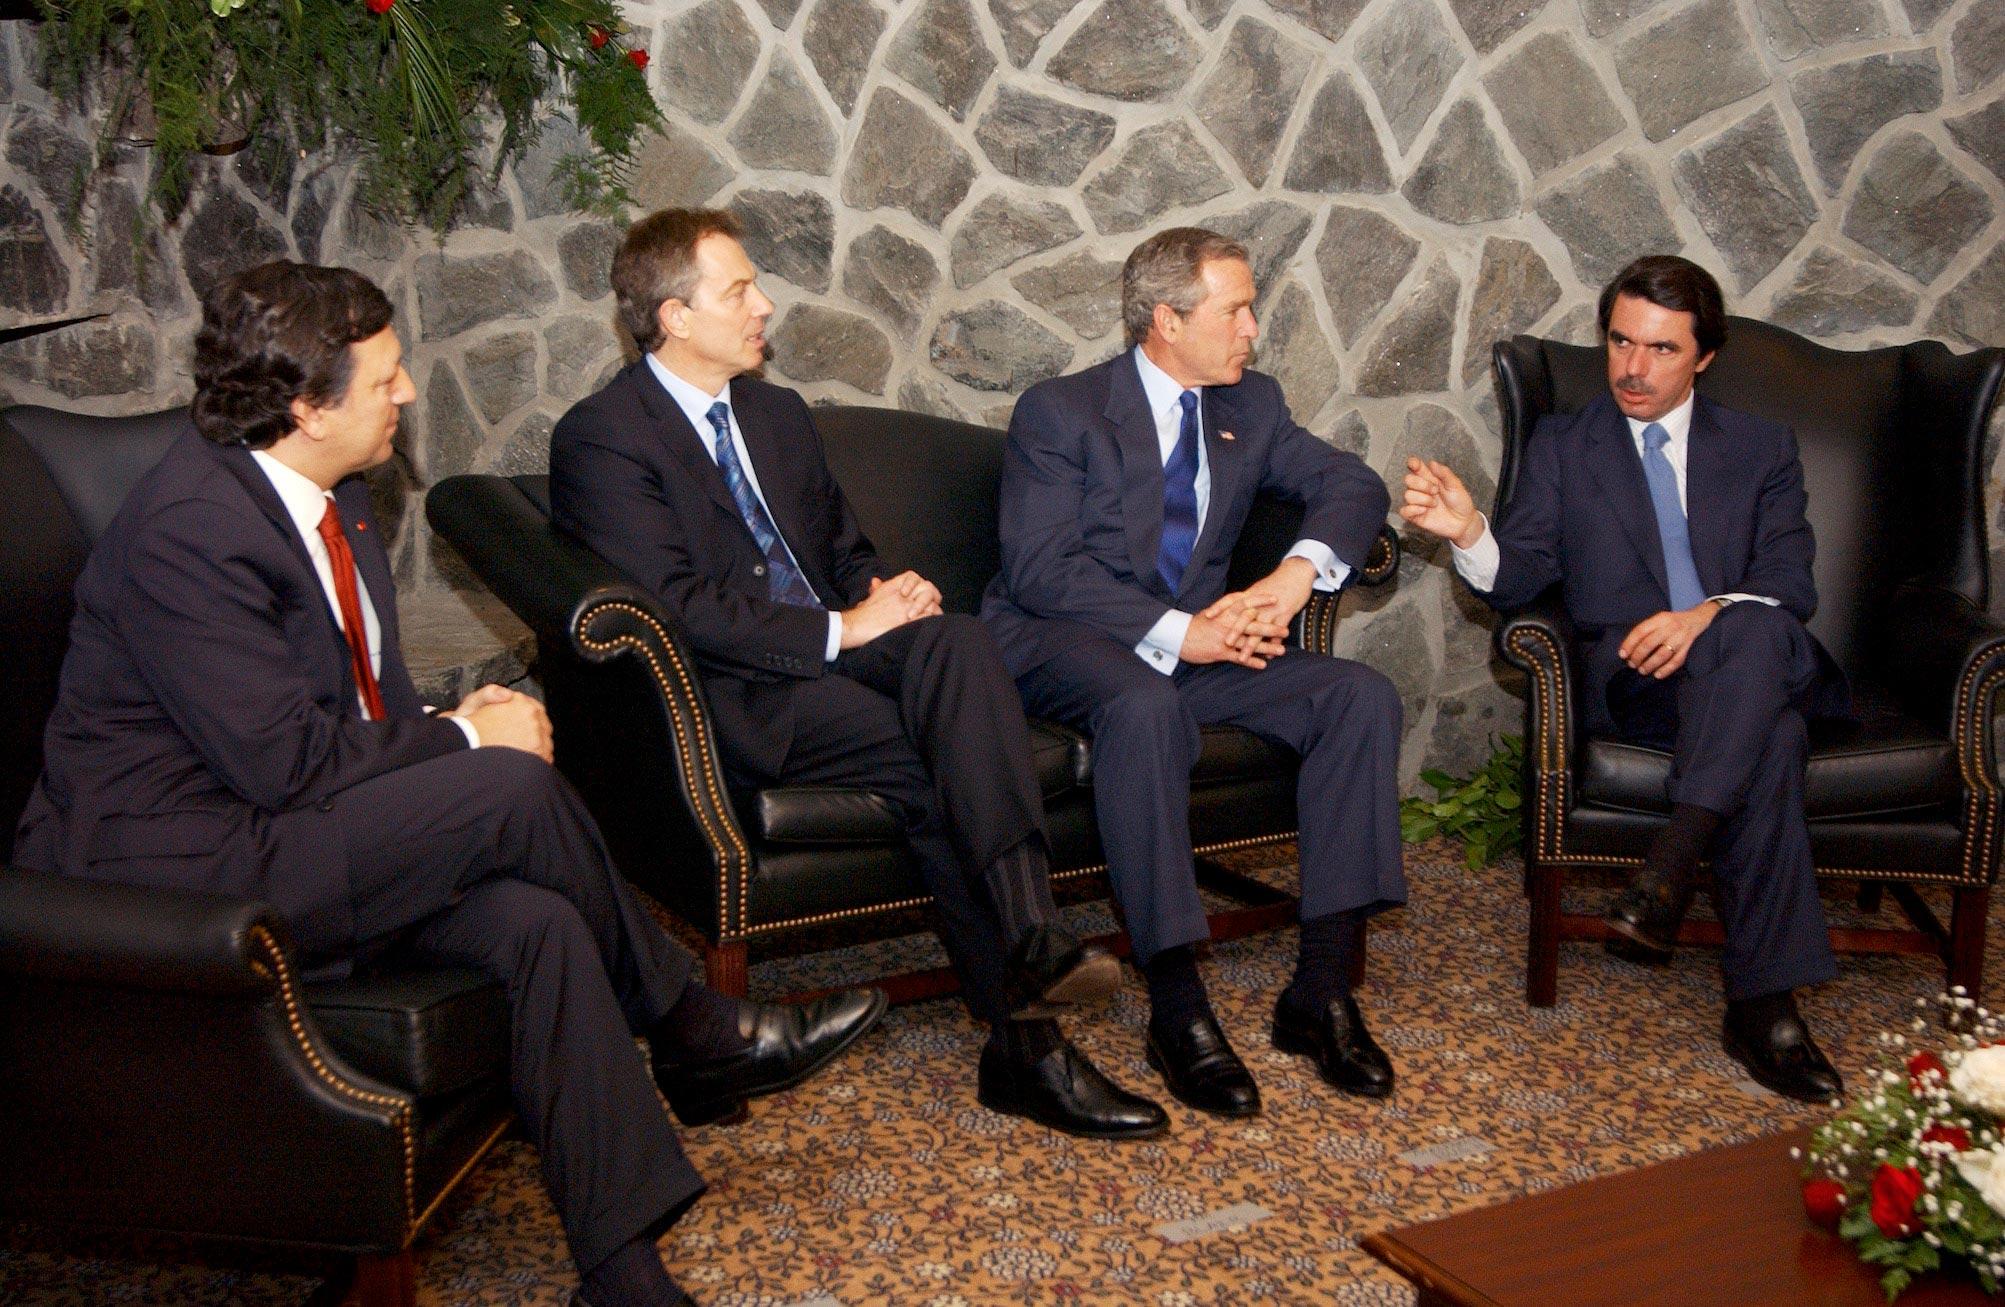 José Manuel Durão Barroso, Tony Blair, George W. Bush, and José María Aznar, 2003